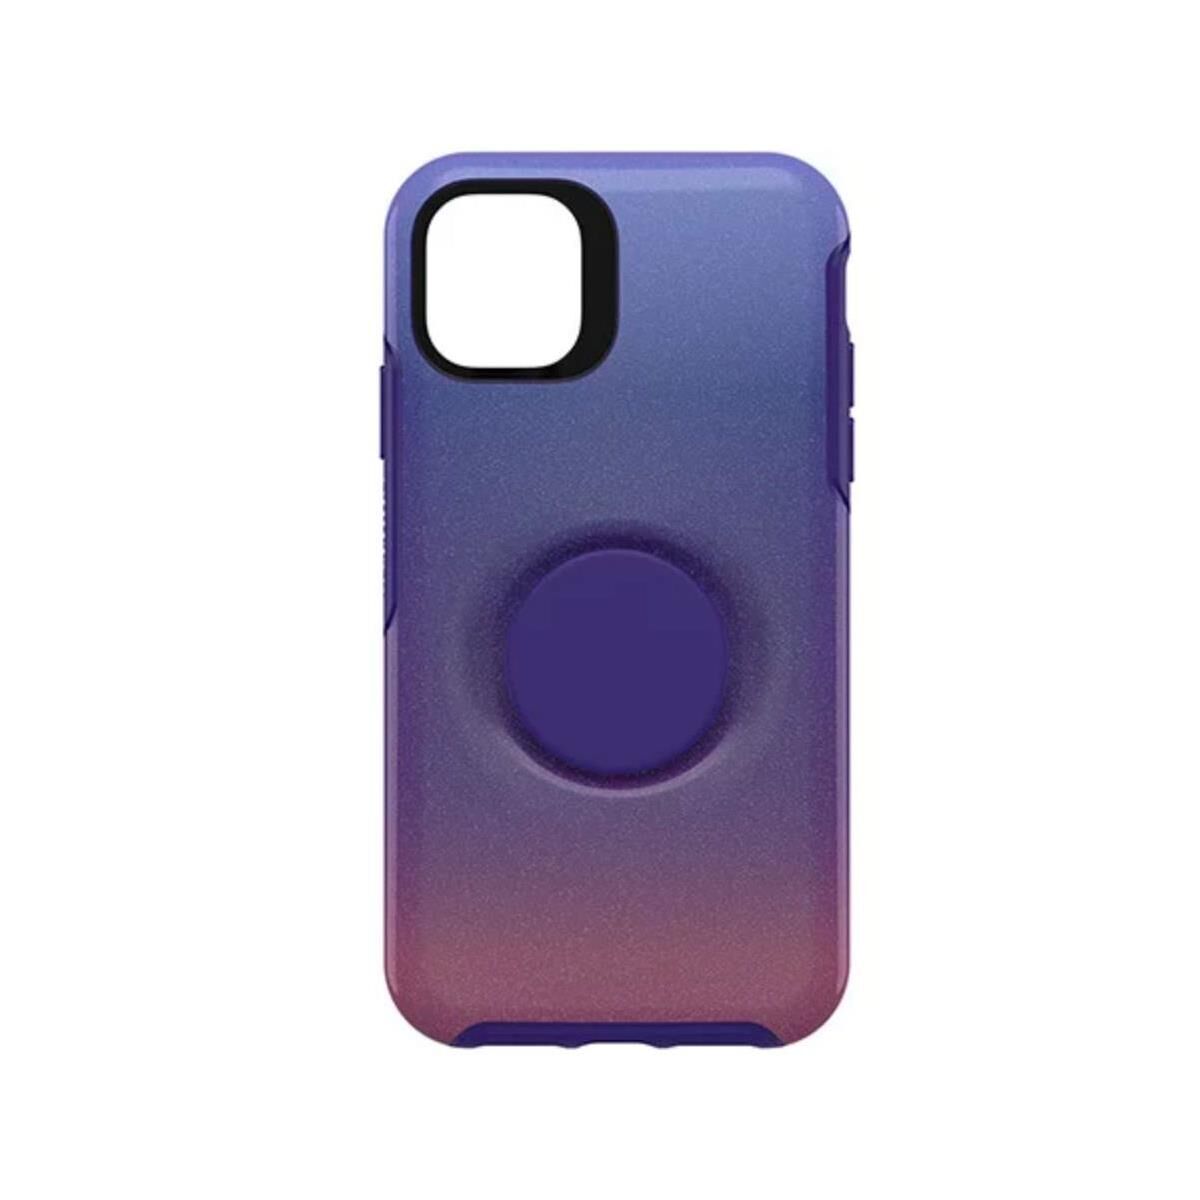 OtterBox Otter + Pop Symmetry Case for iPhone 11, Violet Dusk